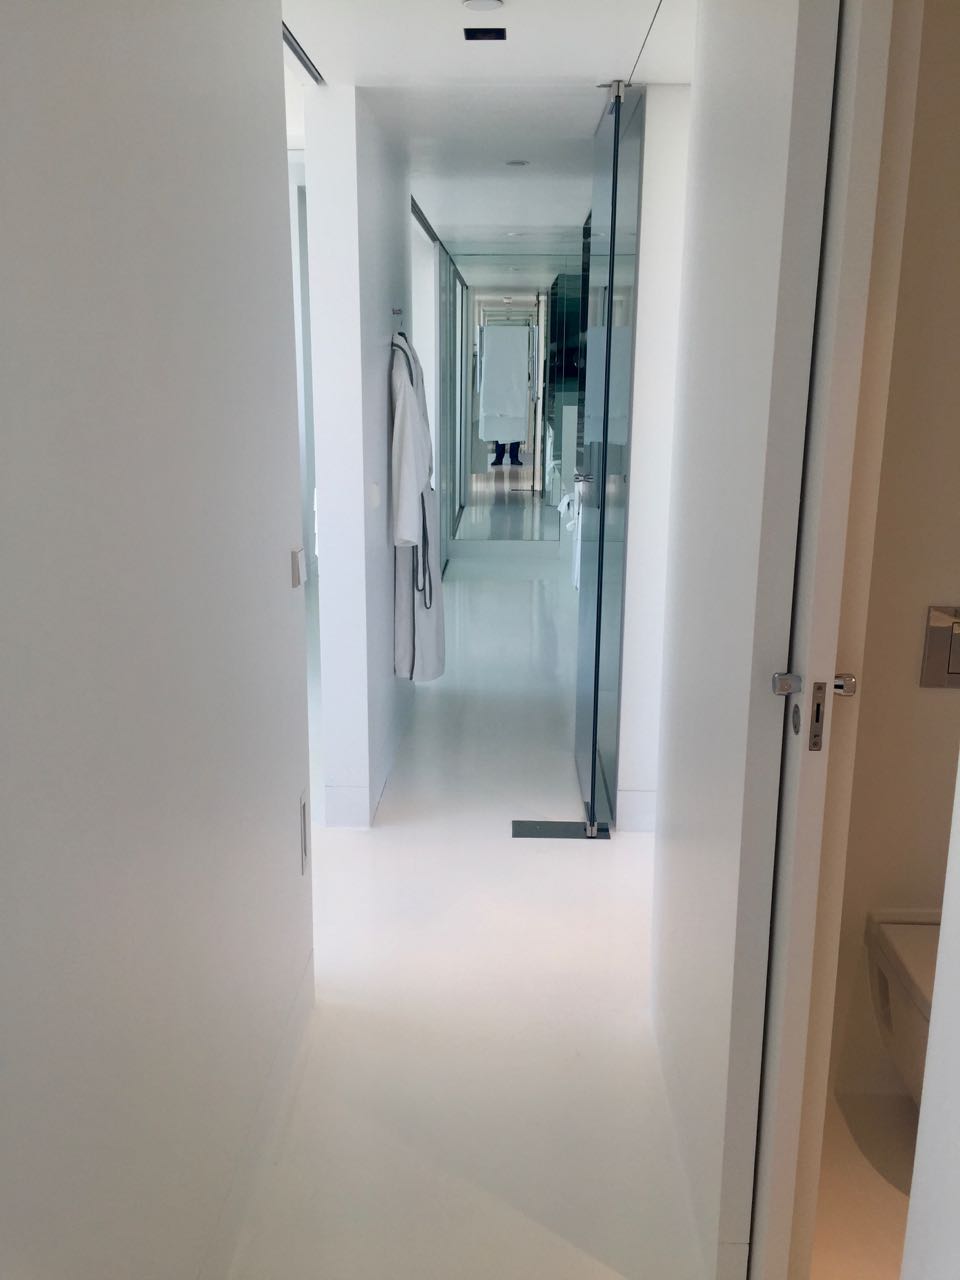 Sofitel Vienna | Bathroom Corridor.jpg